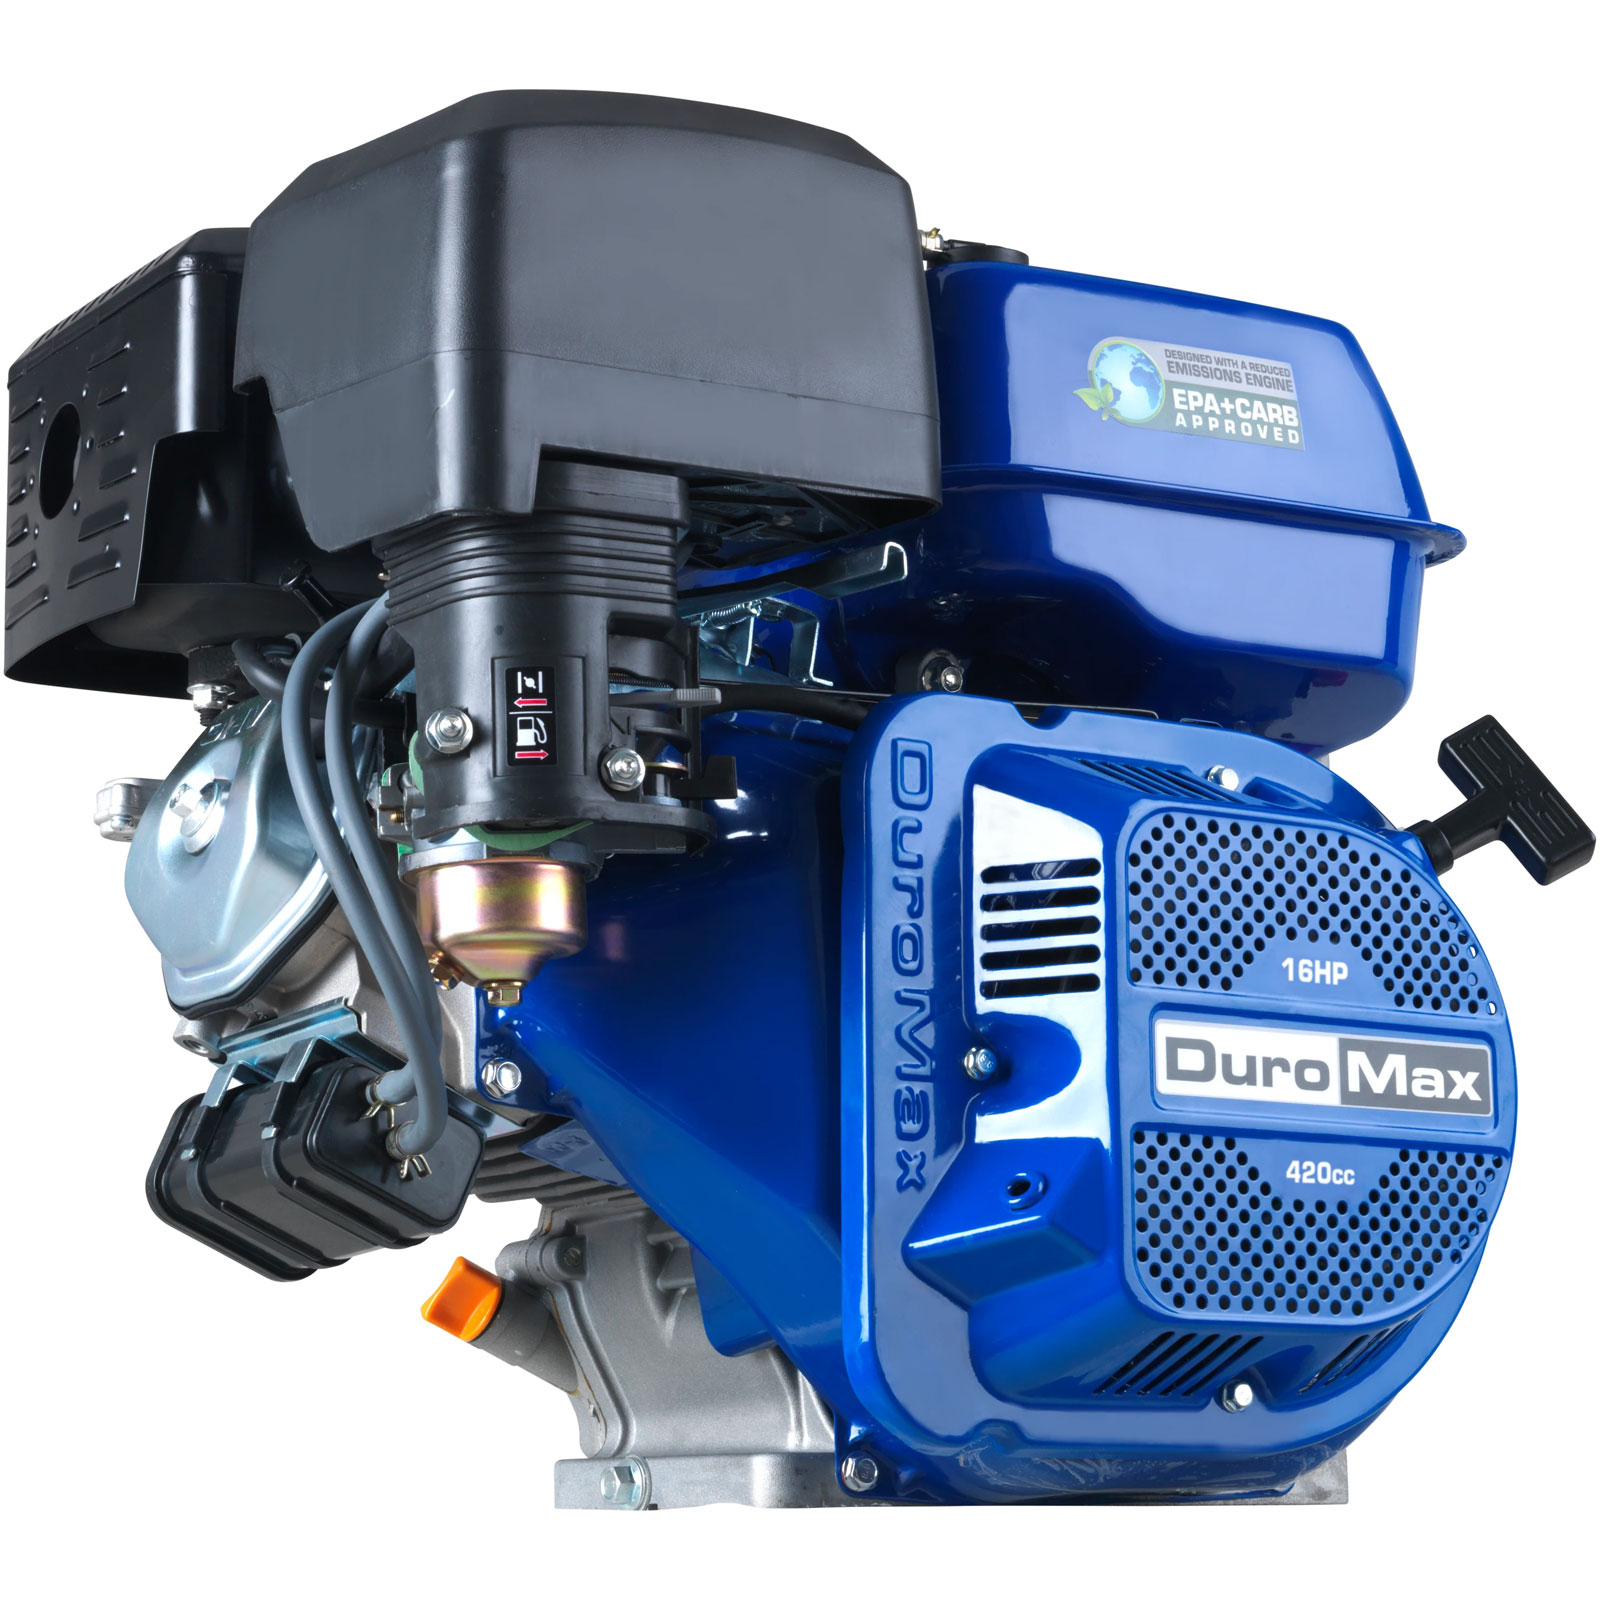 DuroMax XP16HP Engine